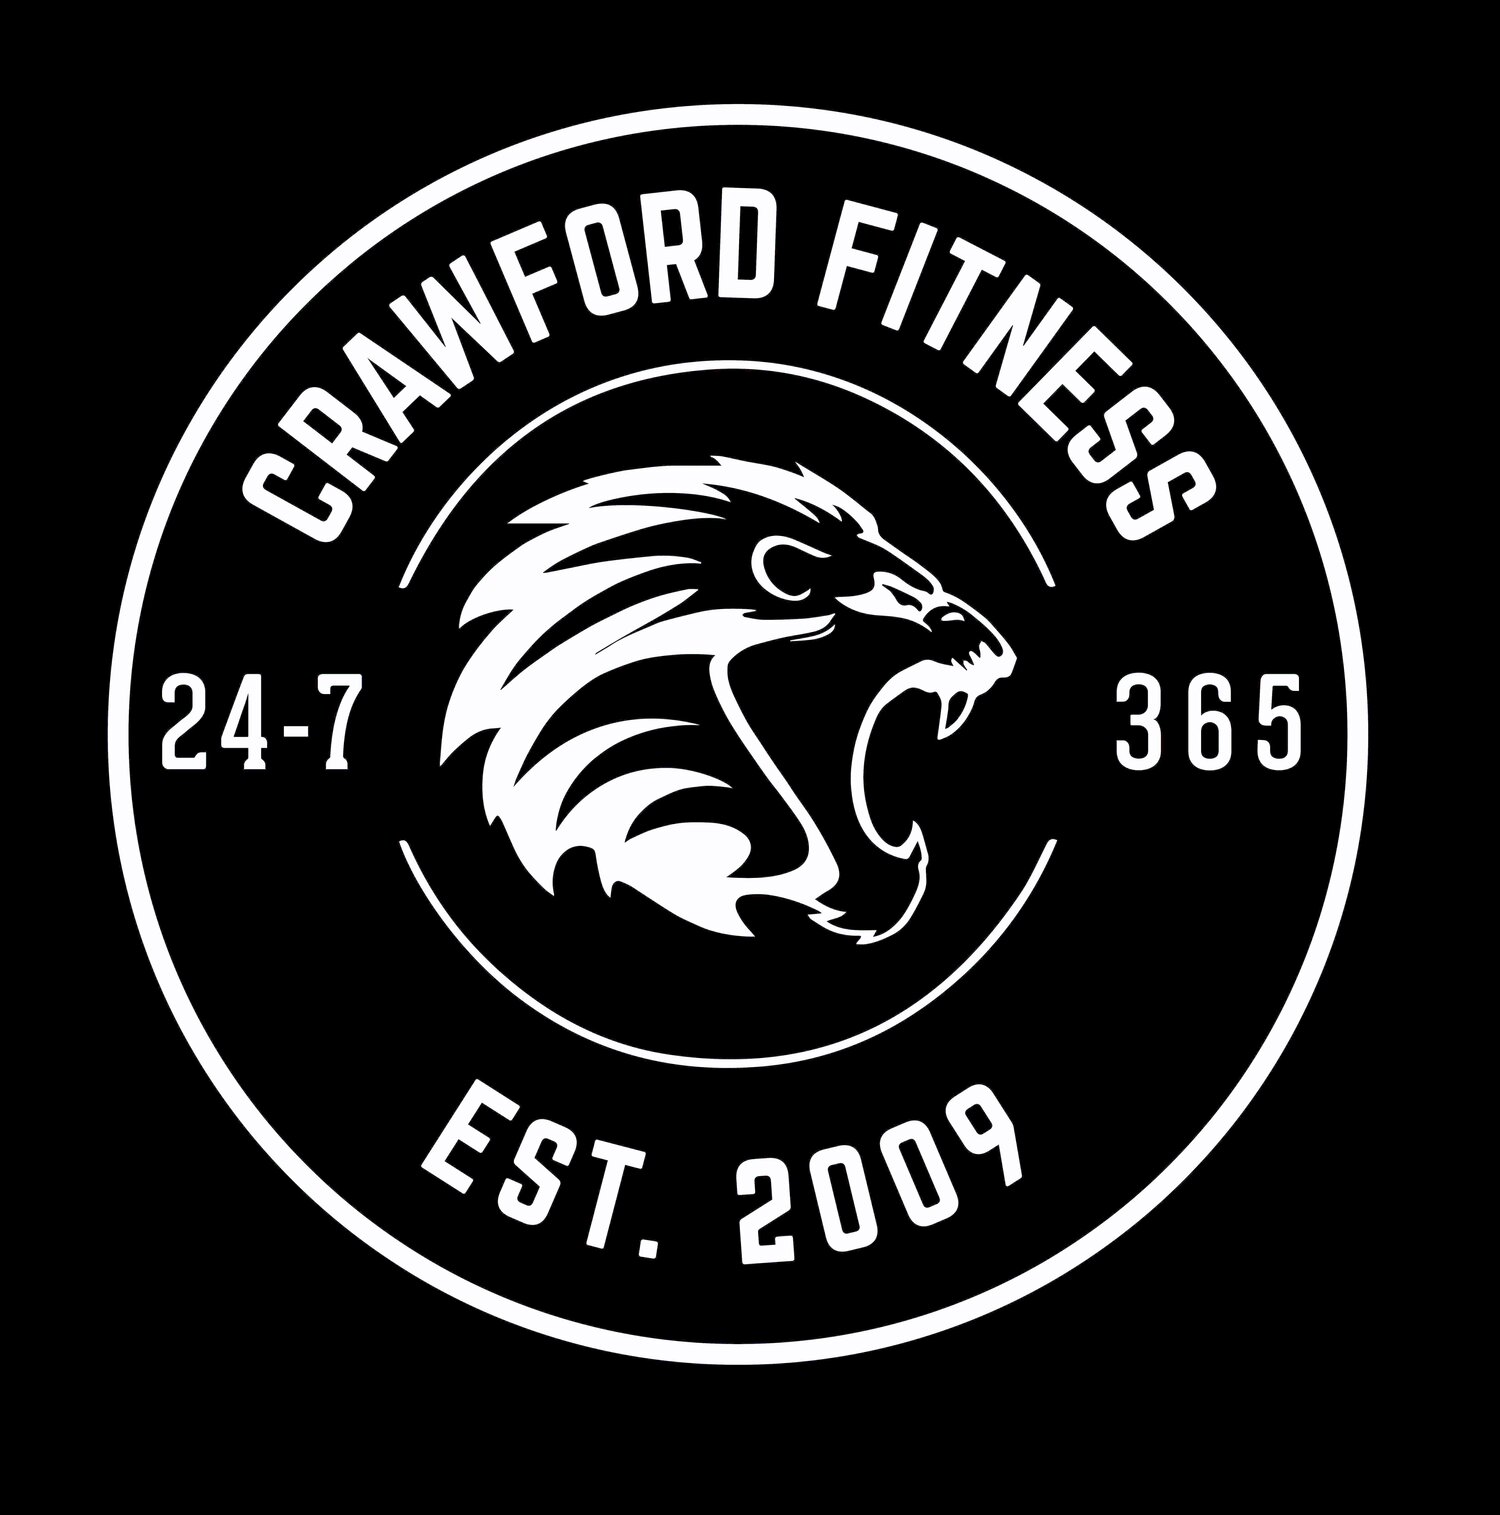 Crawford Fitness